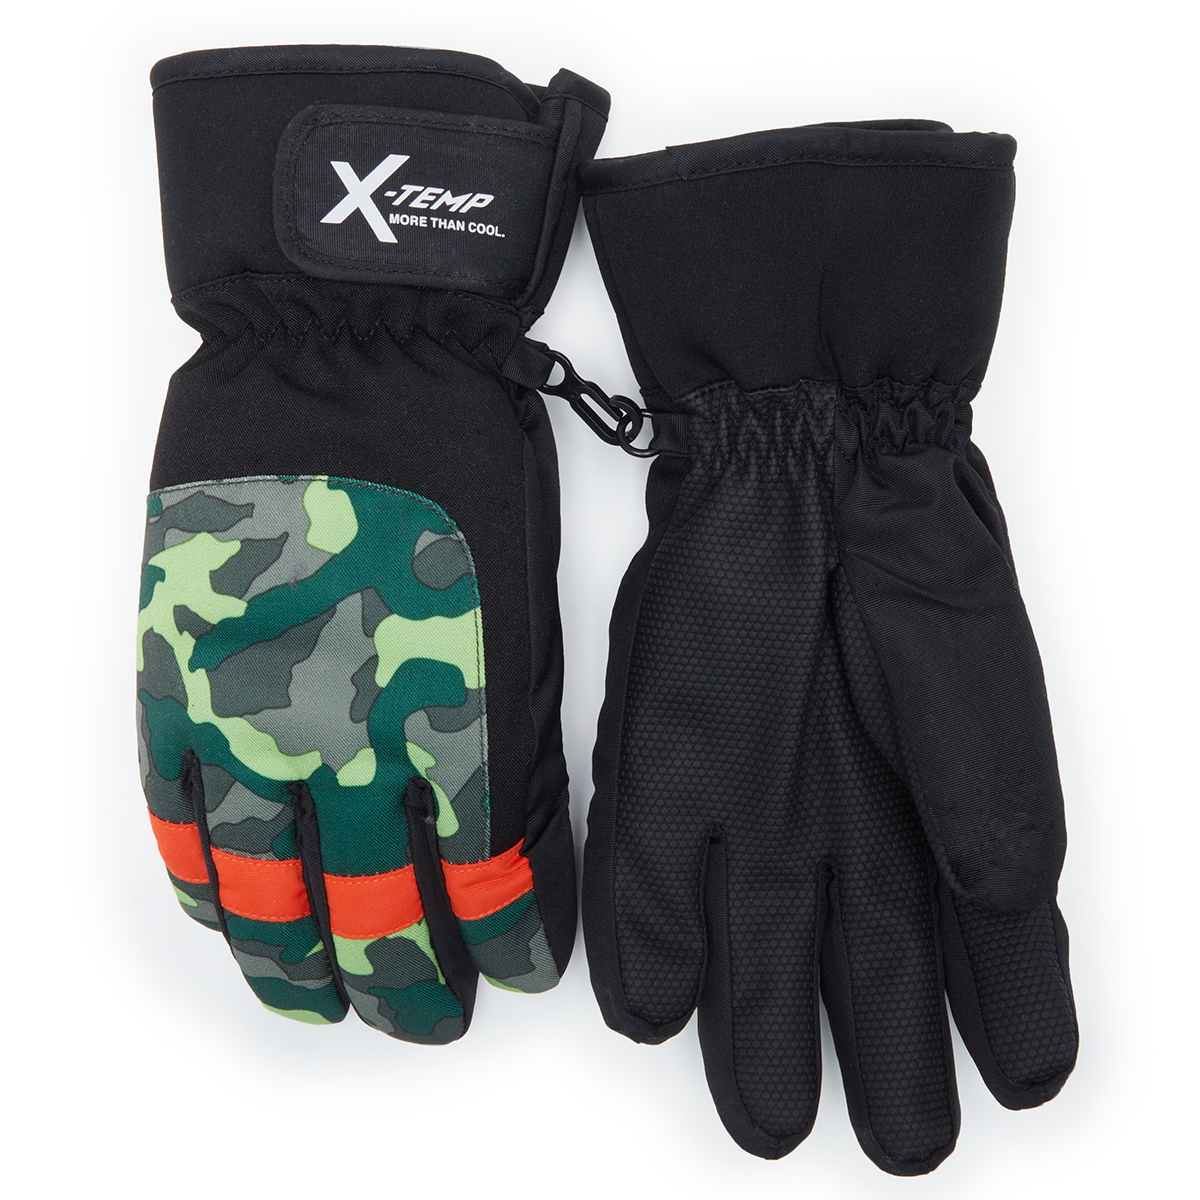 Hanes Boys' Hybrid Ski Gloves - Green, L/XL